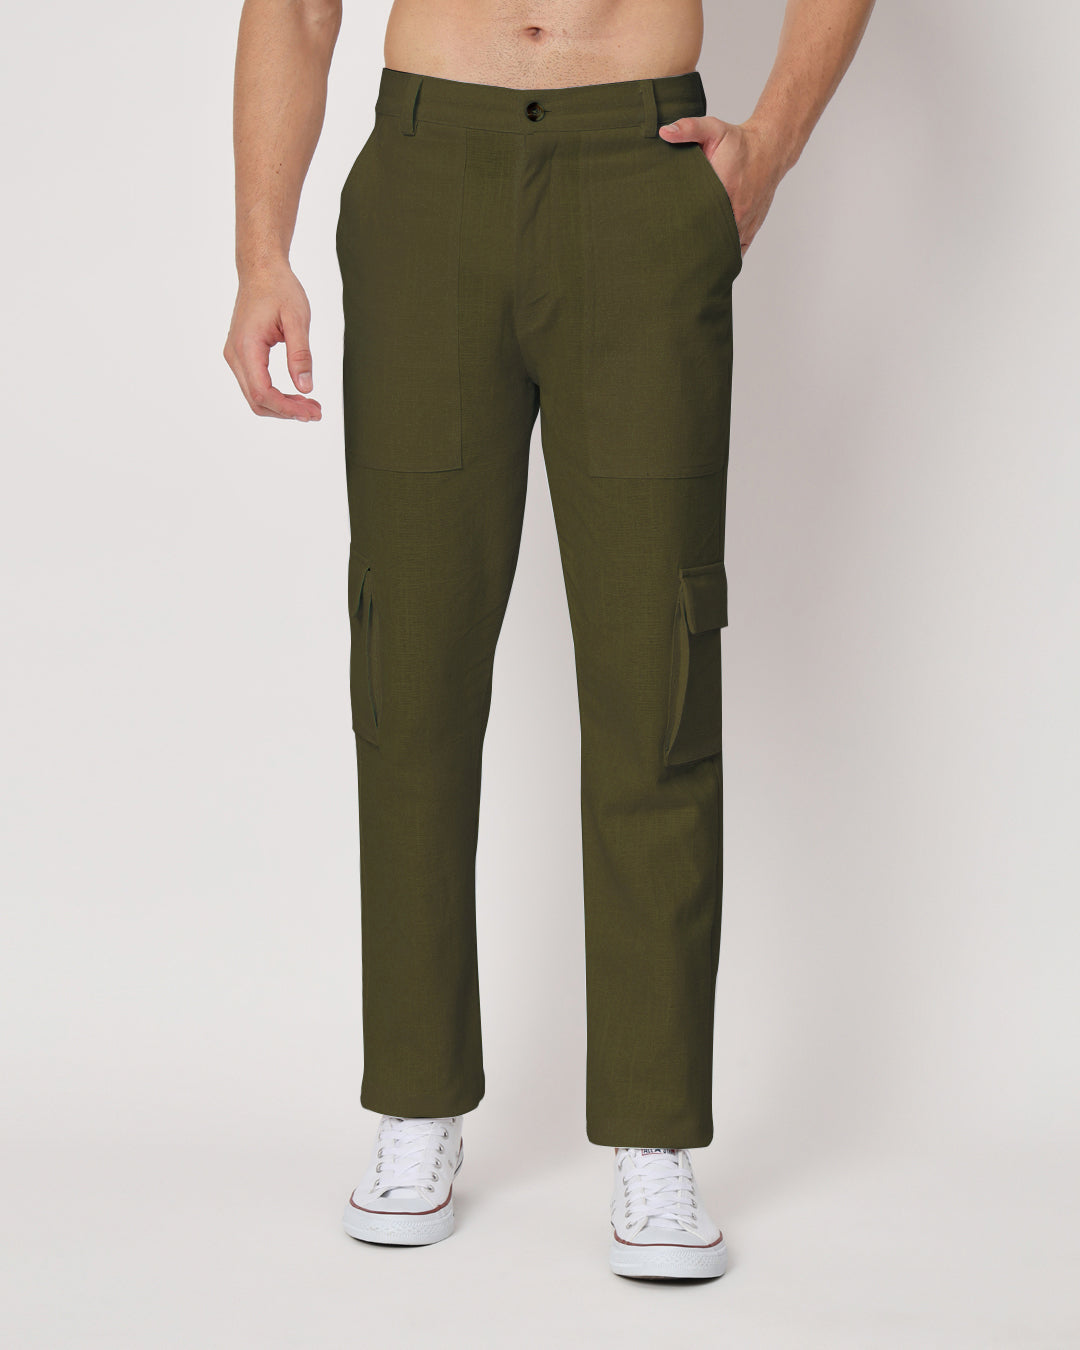 Combo: Function Flex Midnight Blue & Olive Green Men's Pants- Set Of 2